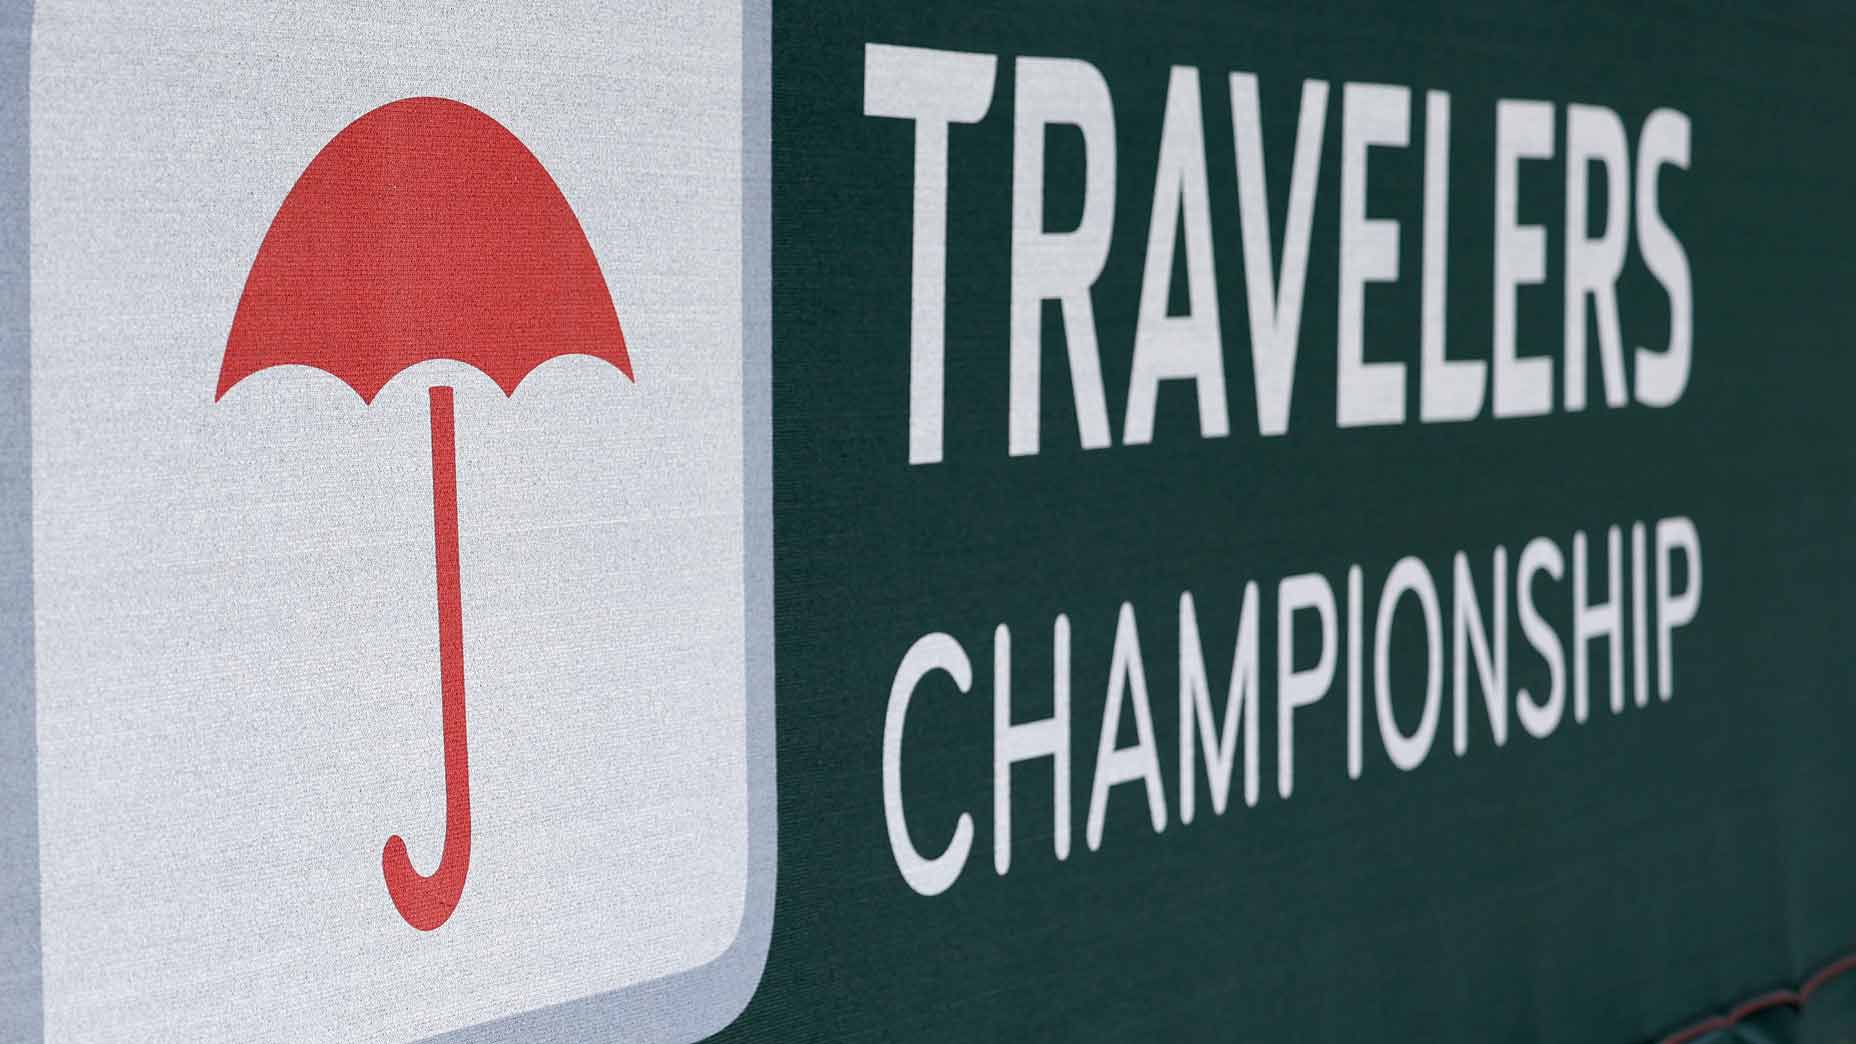 Travelers Championship signage at tournament